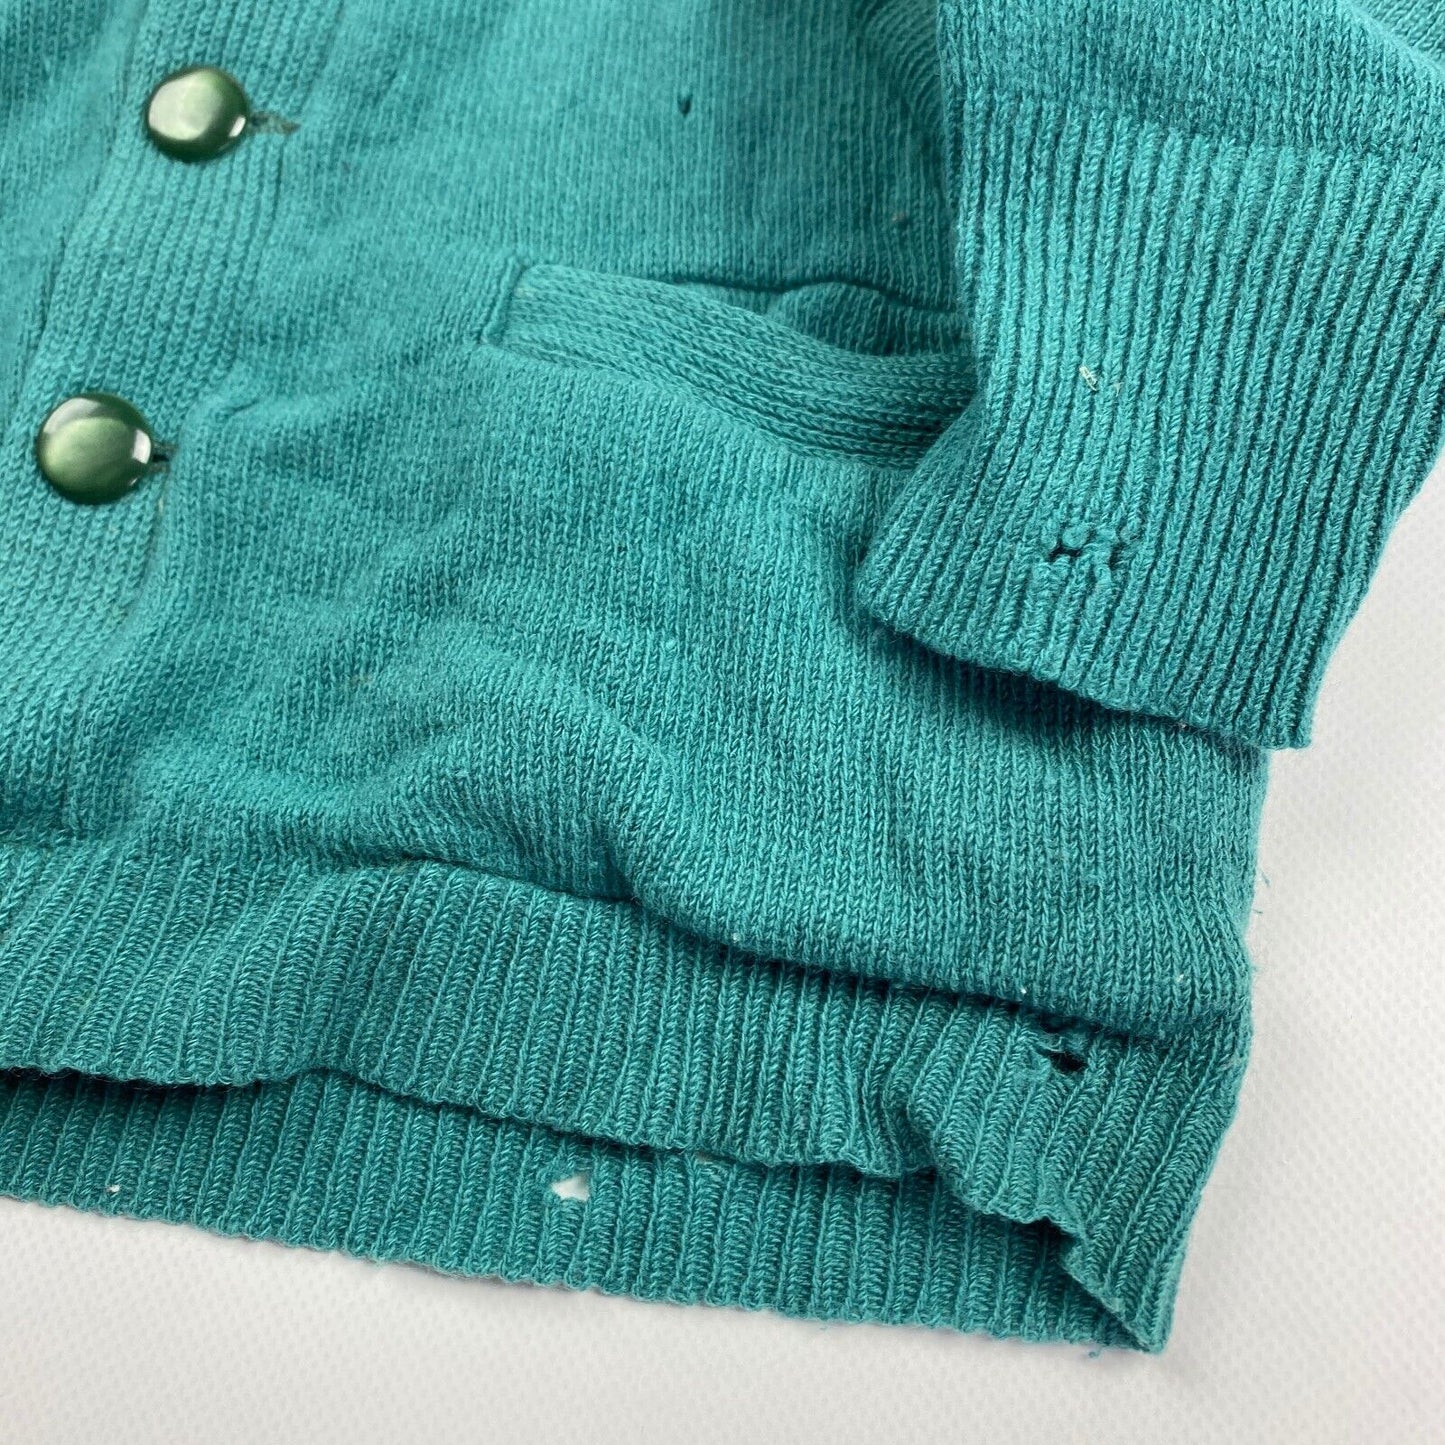 VINTAGE 80s Penmans Teal Wool Distressed Cardigan Sweater sz Small Men